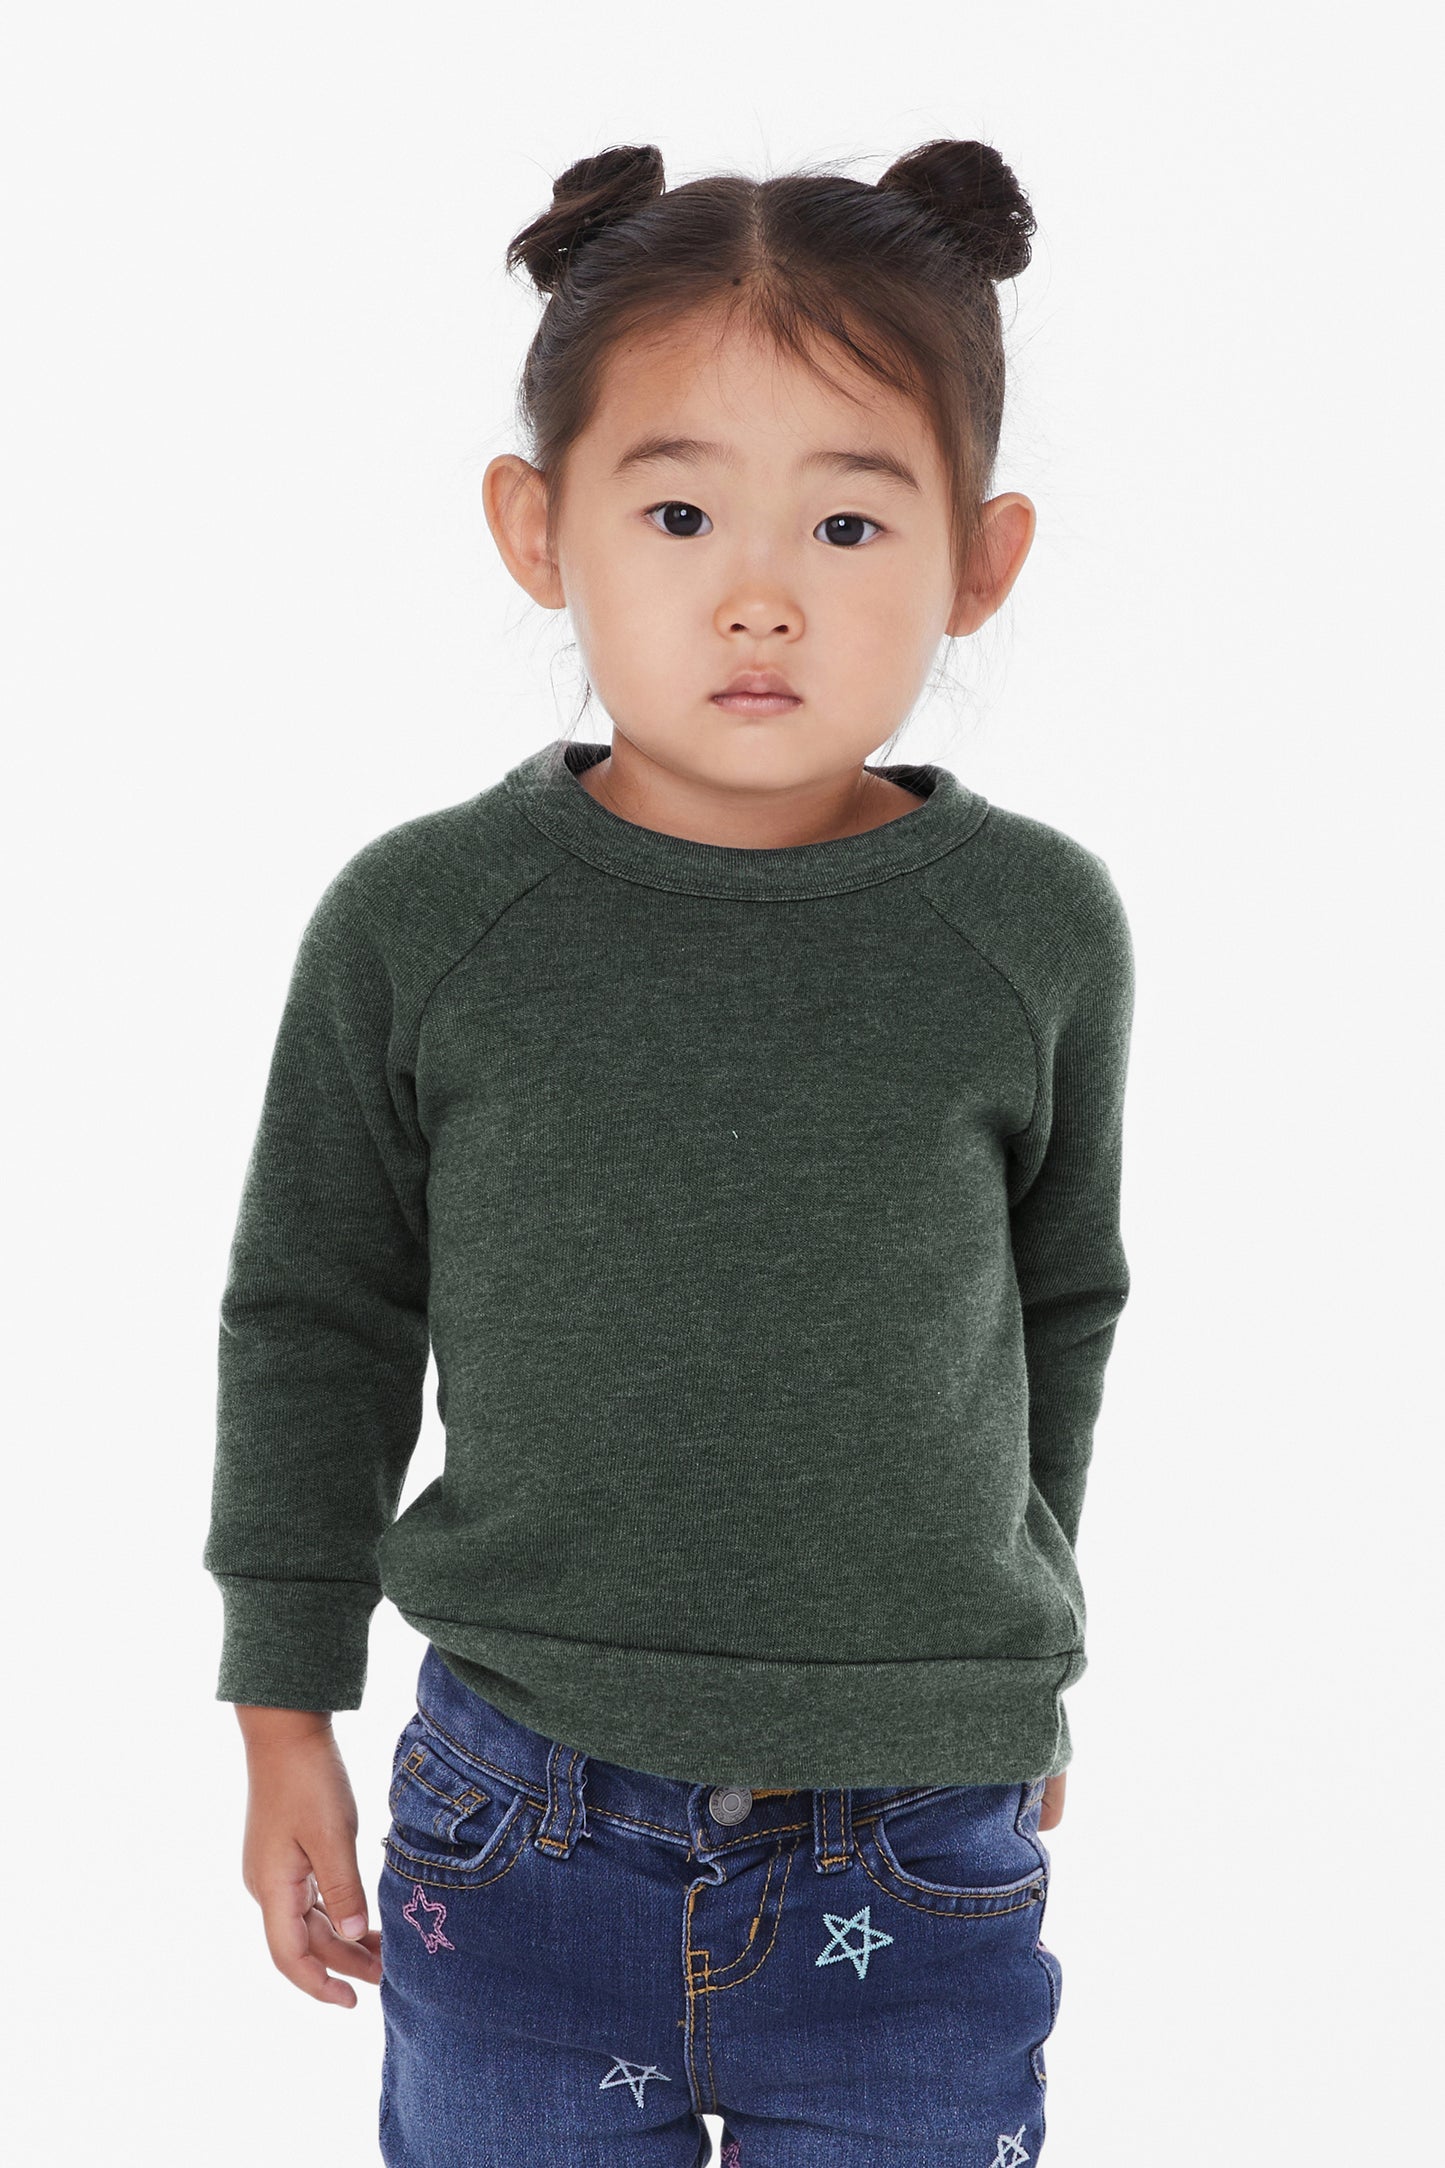 Pre-order Little Sis Vibes Toddler Sweatshirt